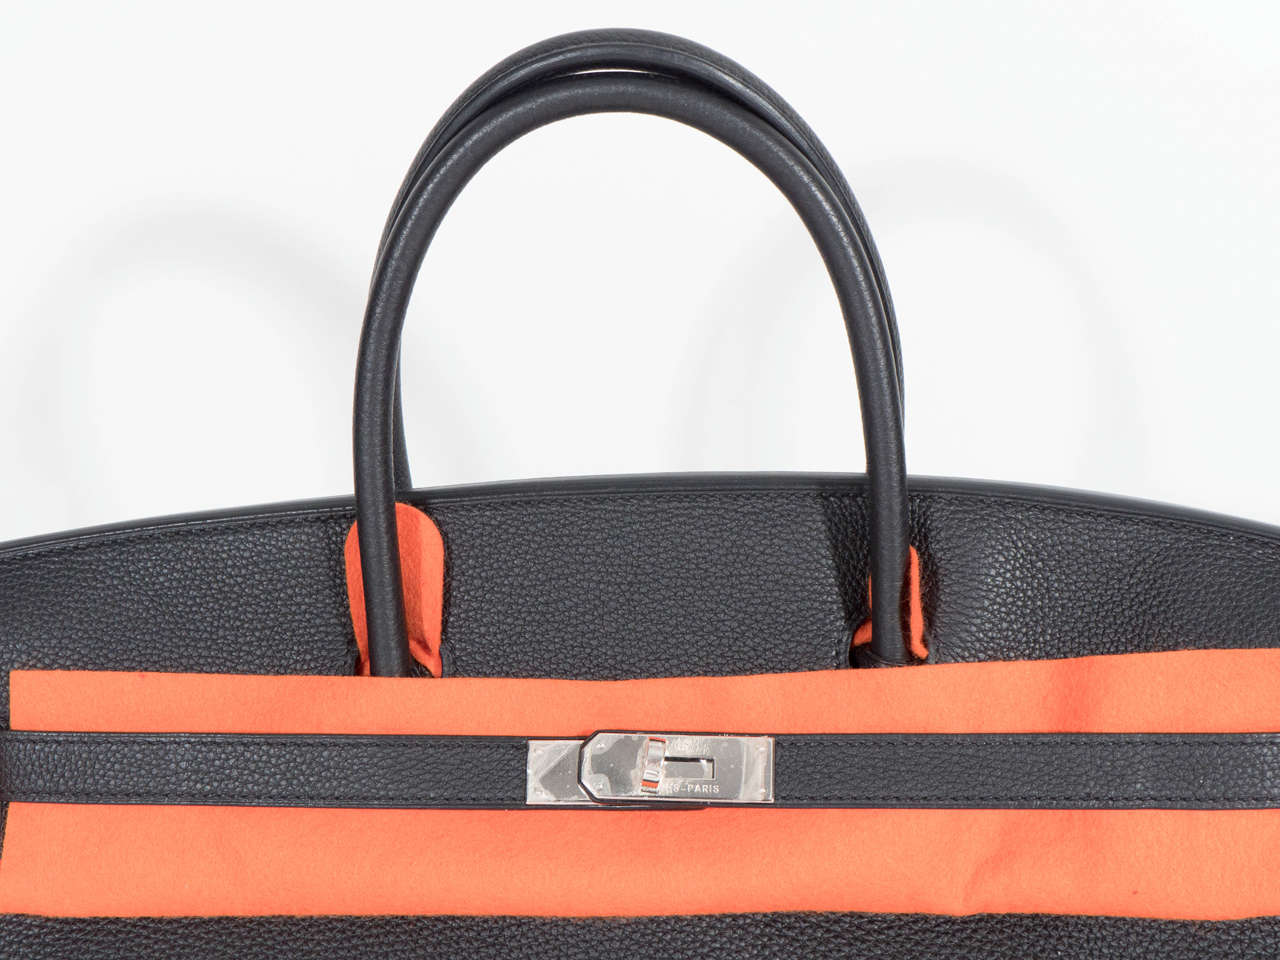 Contemporary Hermès Paris Birkin Bag 40 in Togo Leather with Palladium Hardware, 2008 For Sale